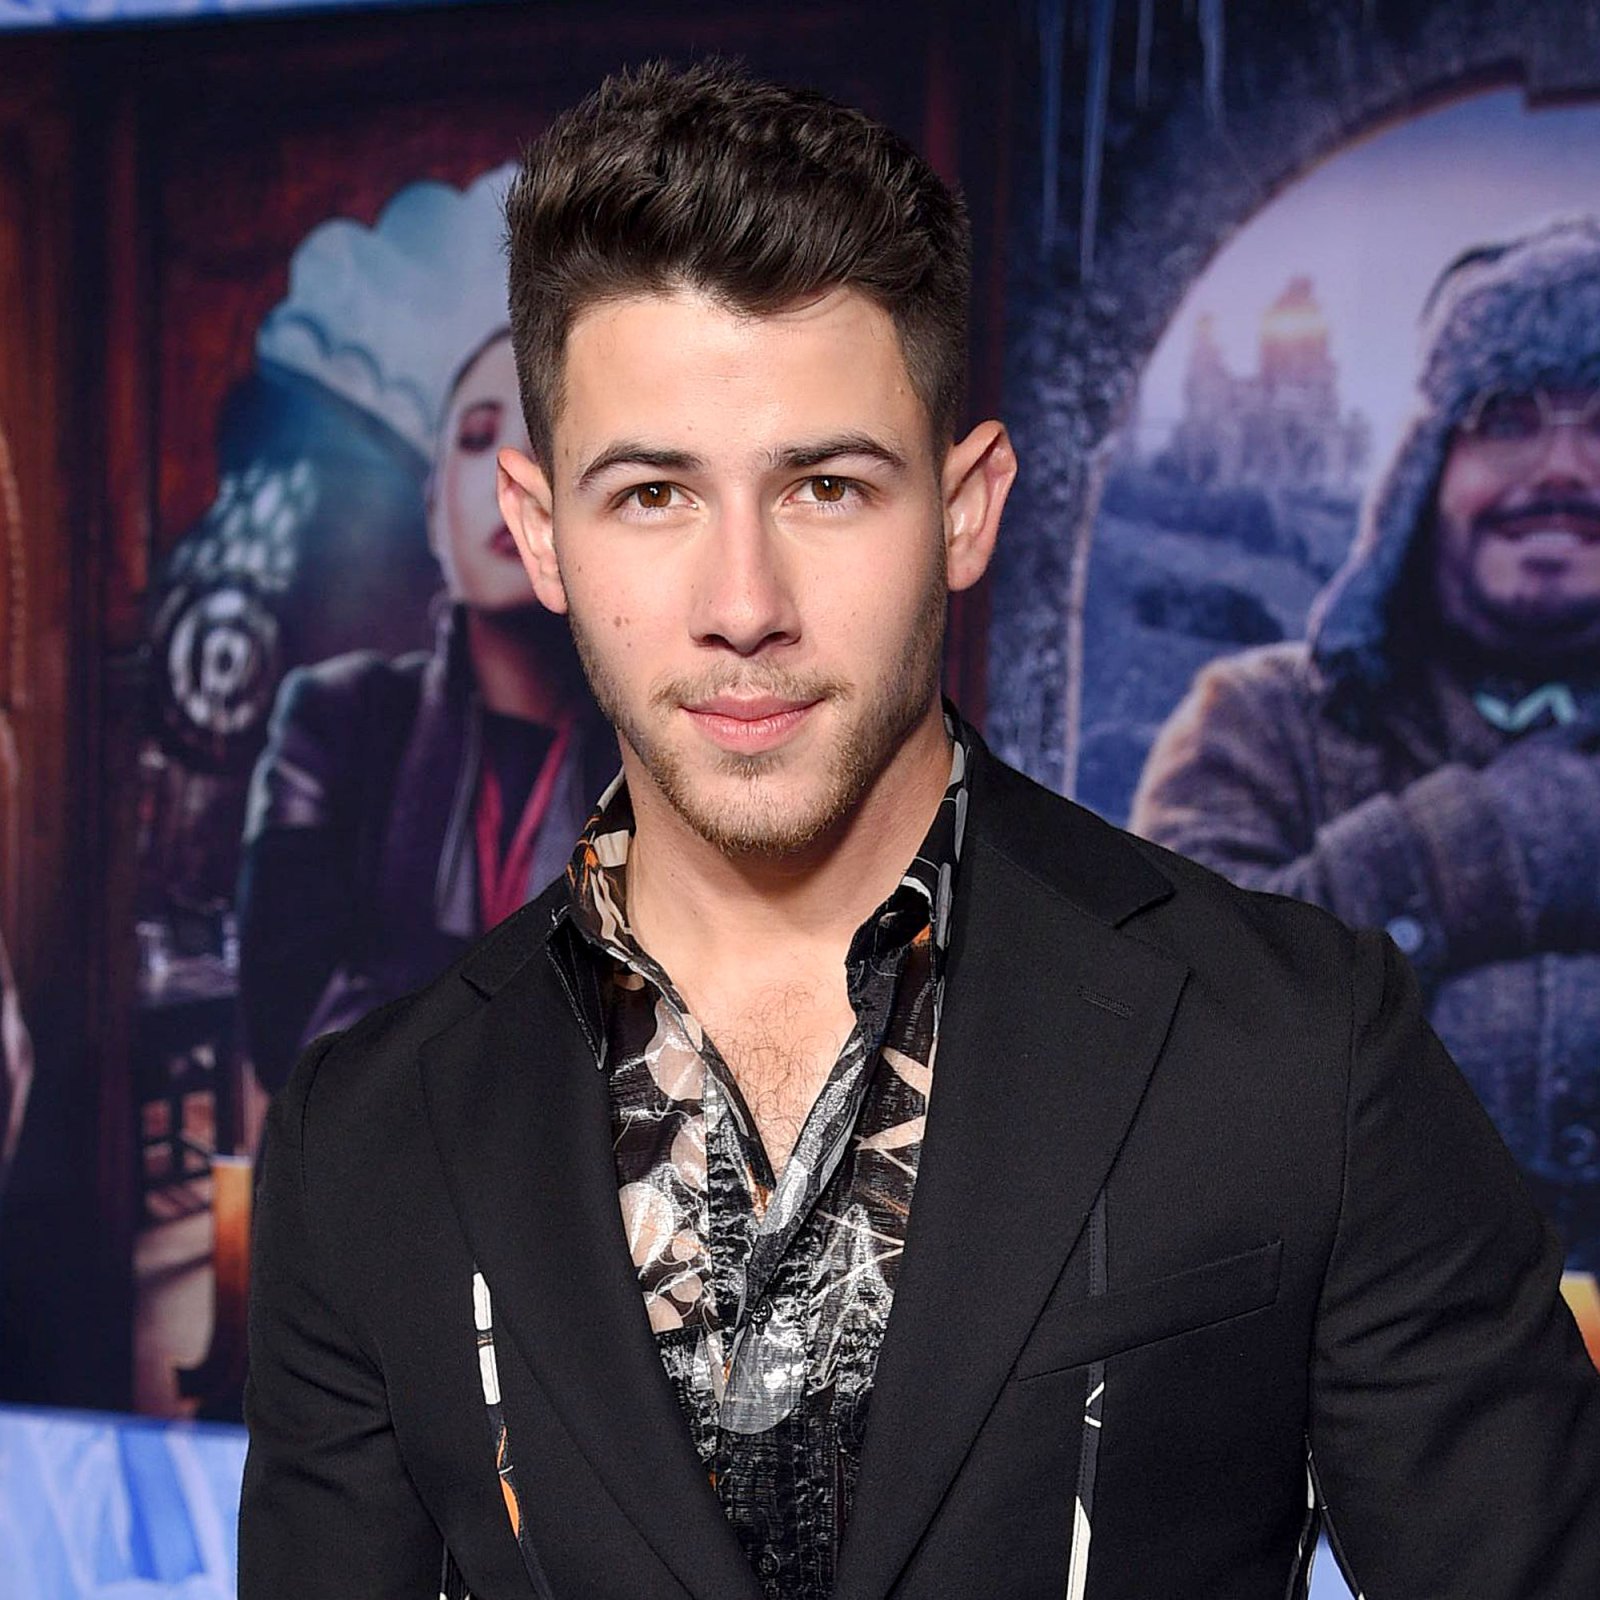 Nick Jonas Celebrities With Super Successful Alcohol Brands